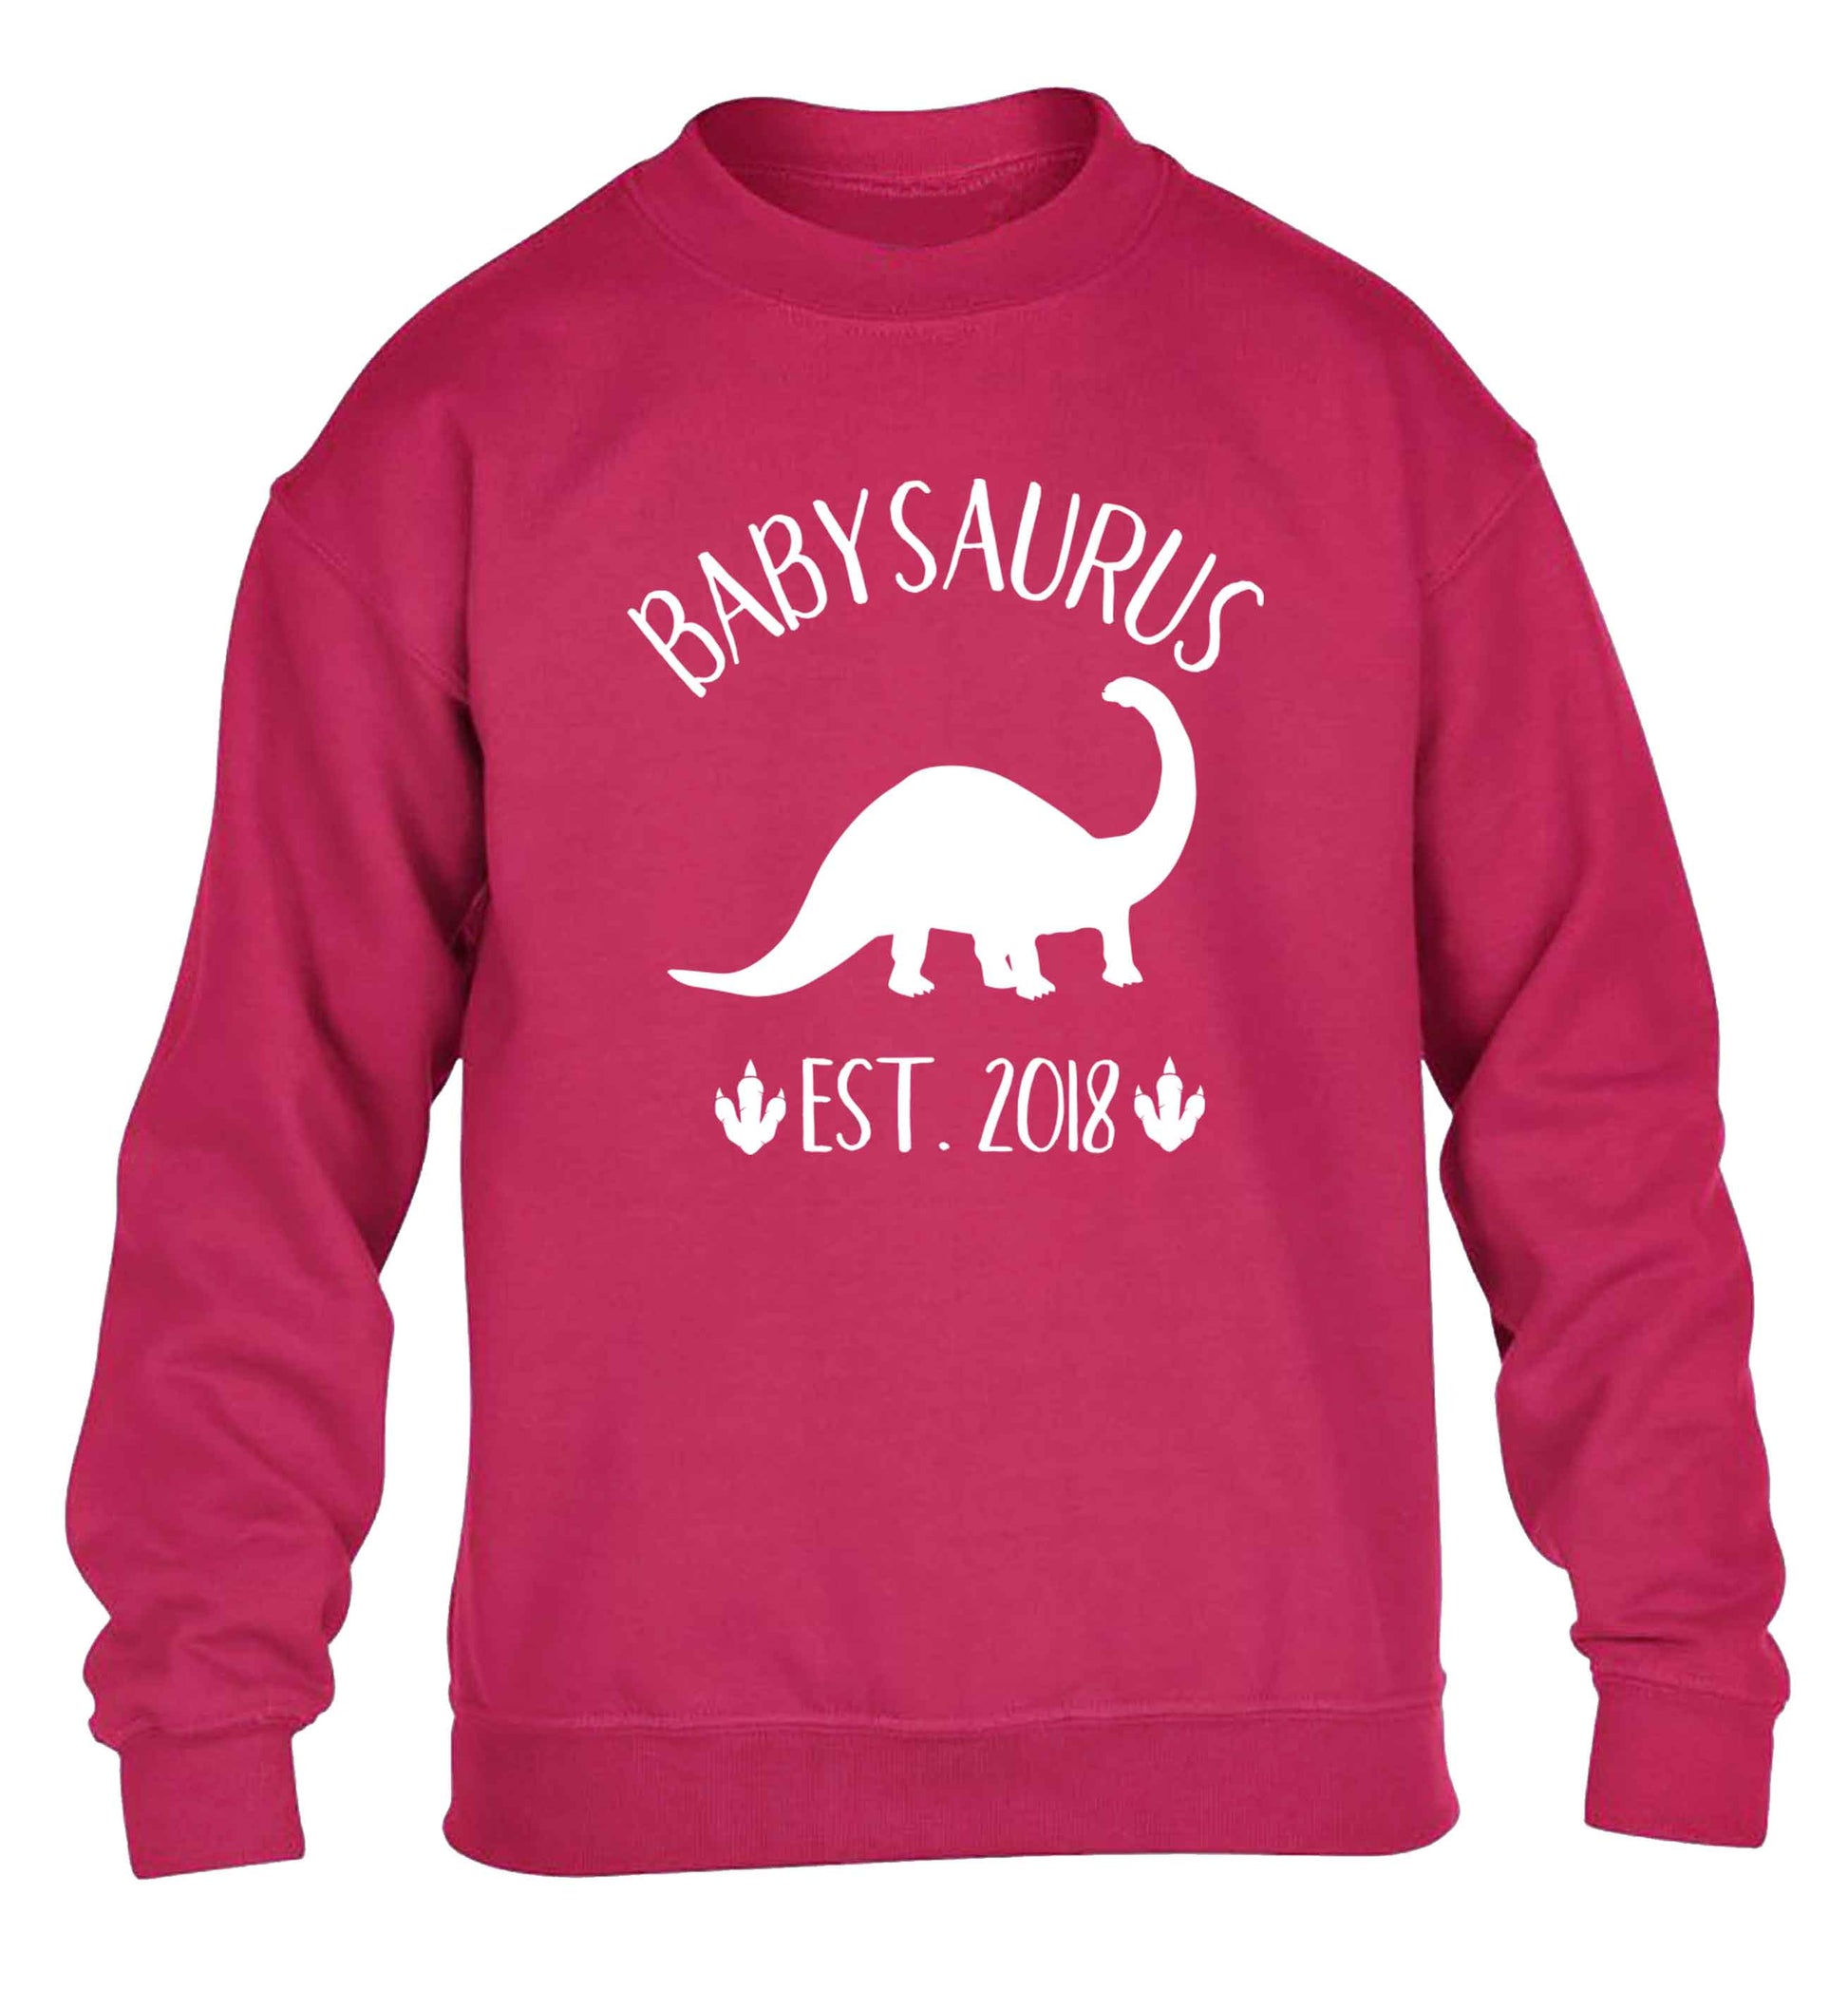 Personalised babysaurus since (custom date) children's pink sweater 12-13 Years